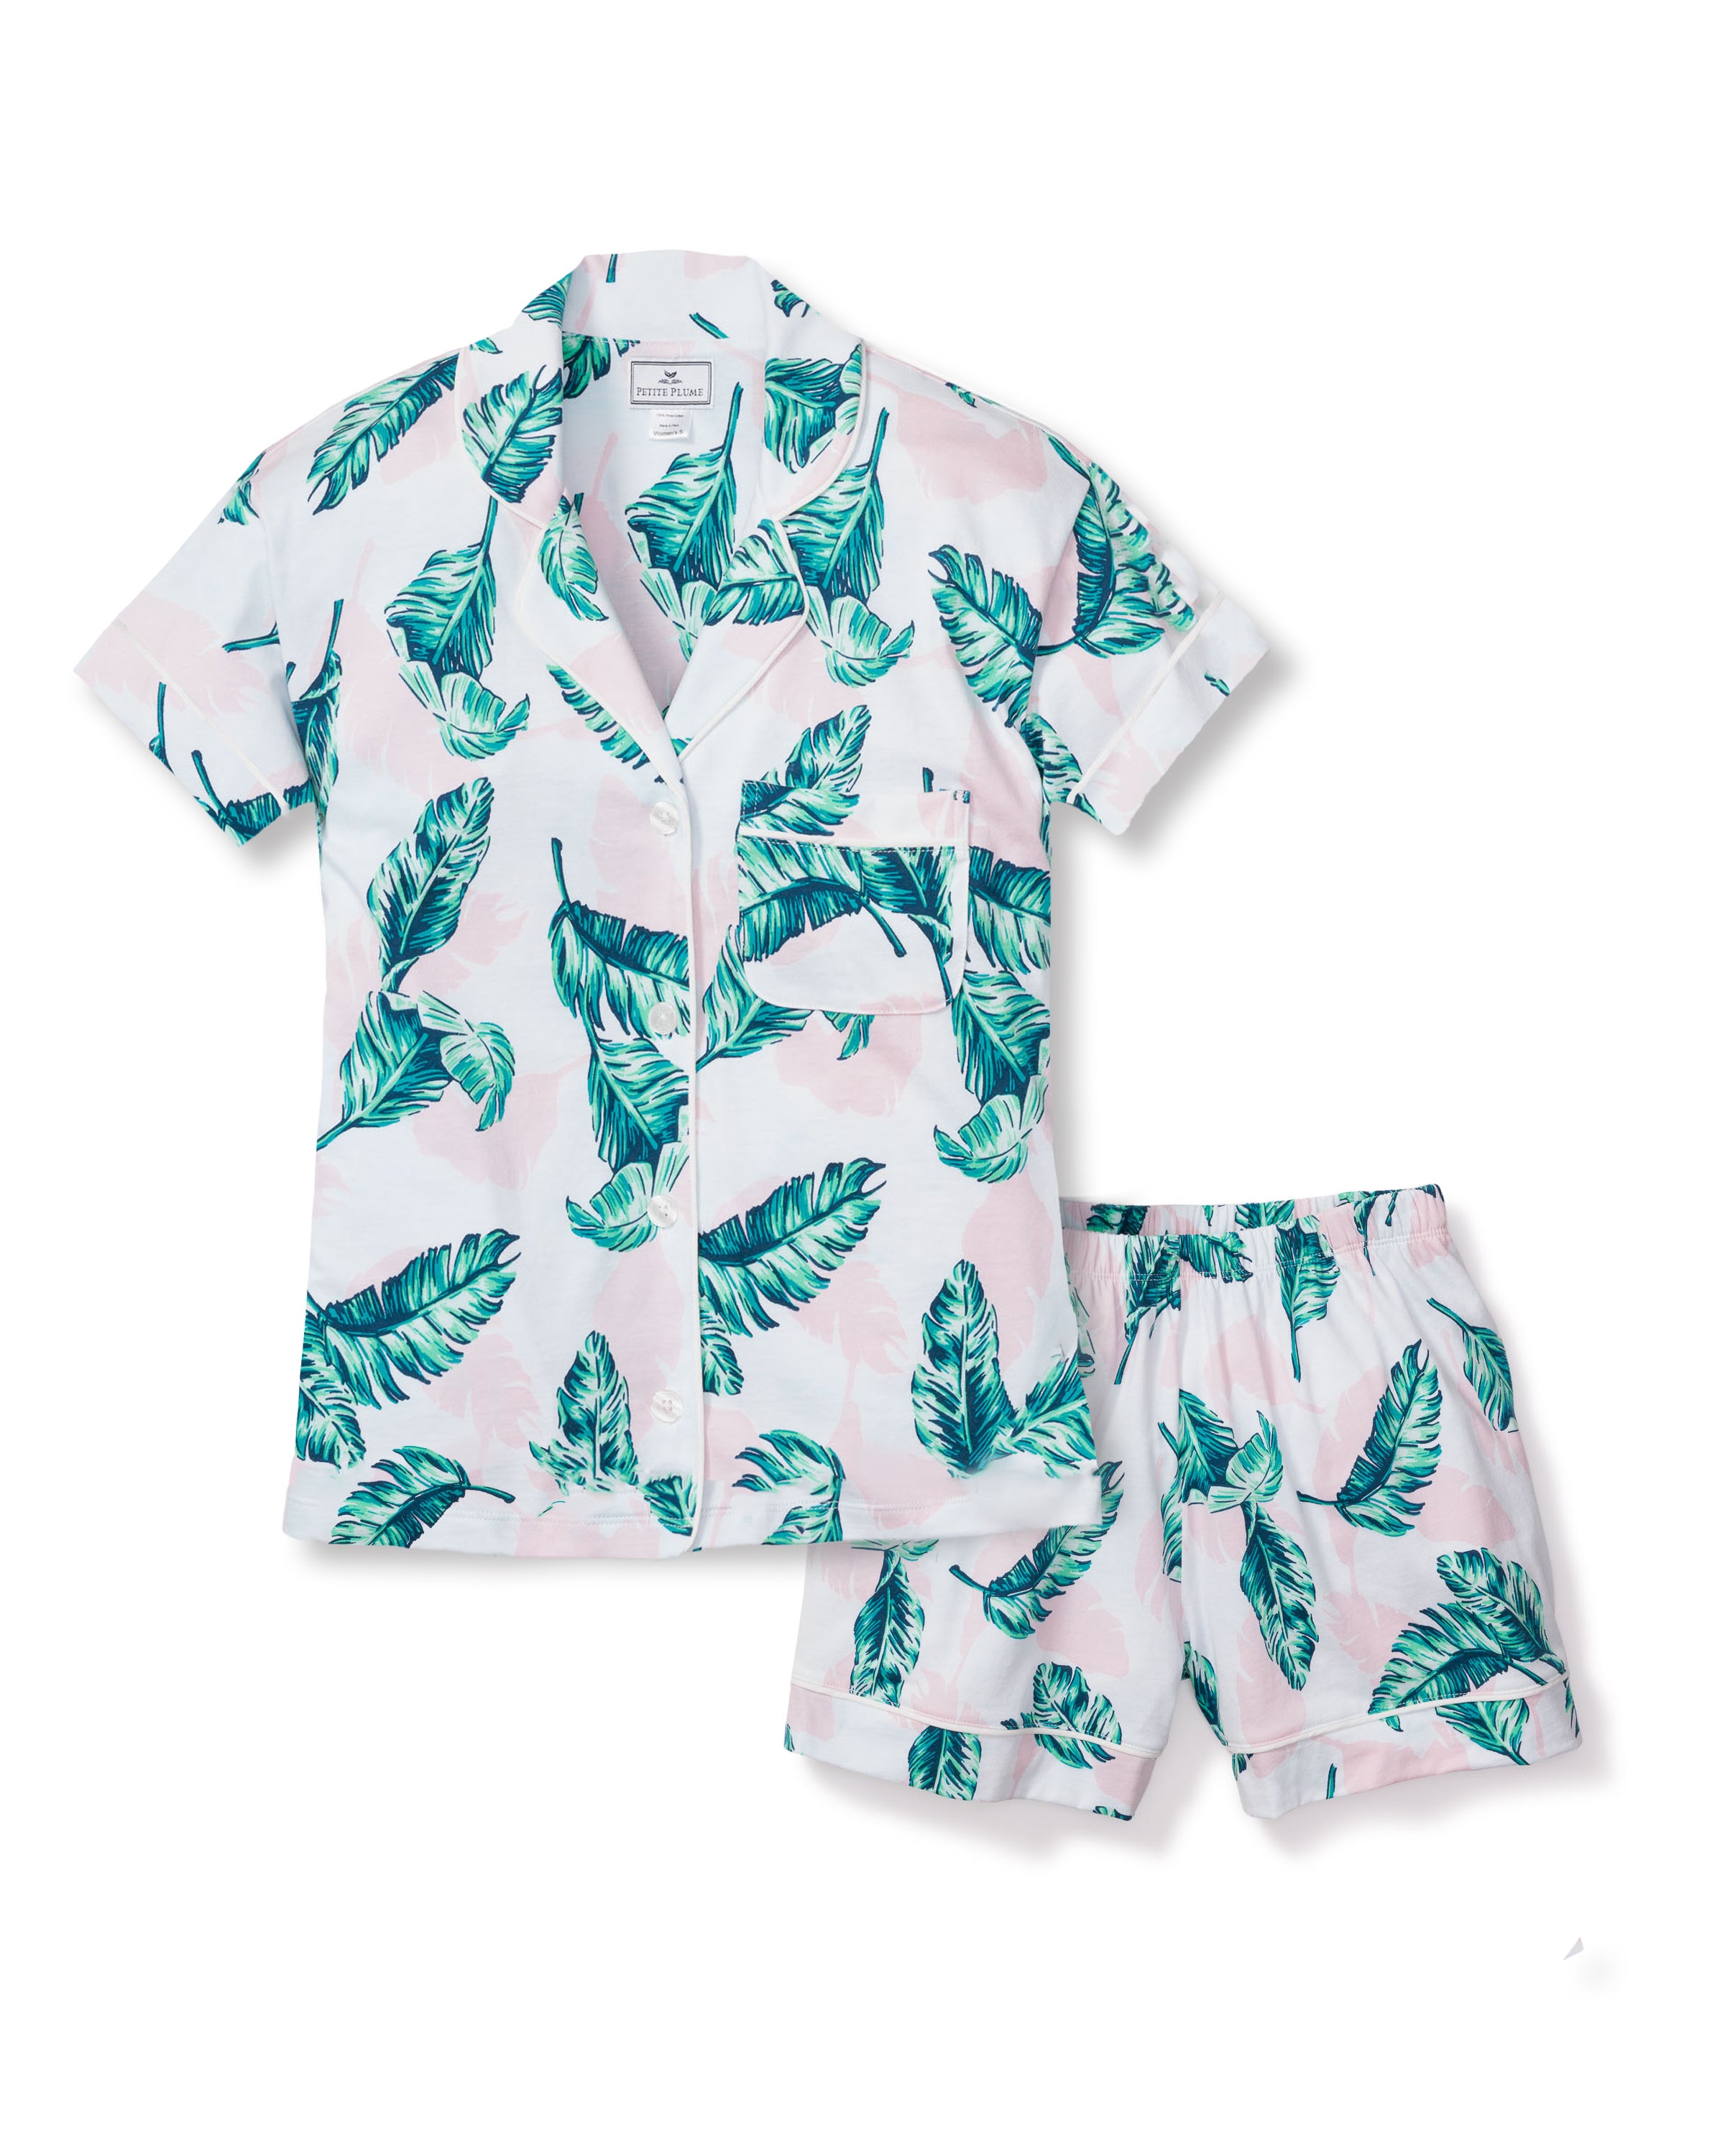 Womens Pyjama Sleep Shorts Check Stripe Nightwear Lounge Pink Blue